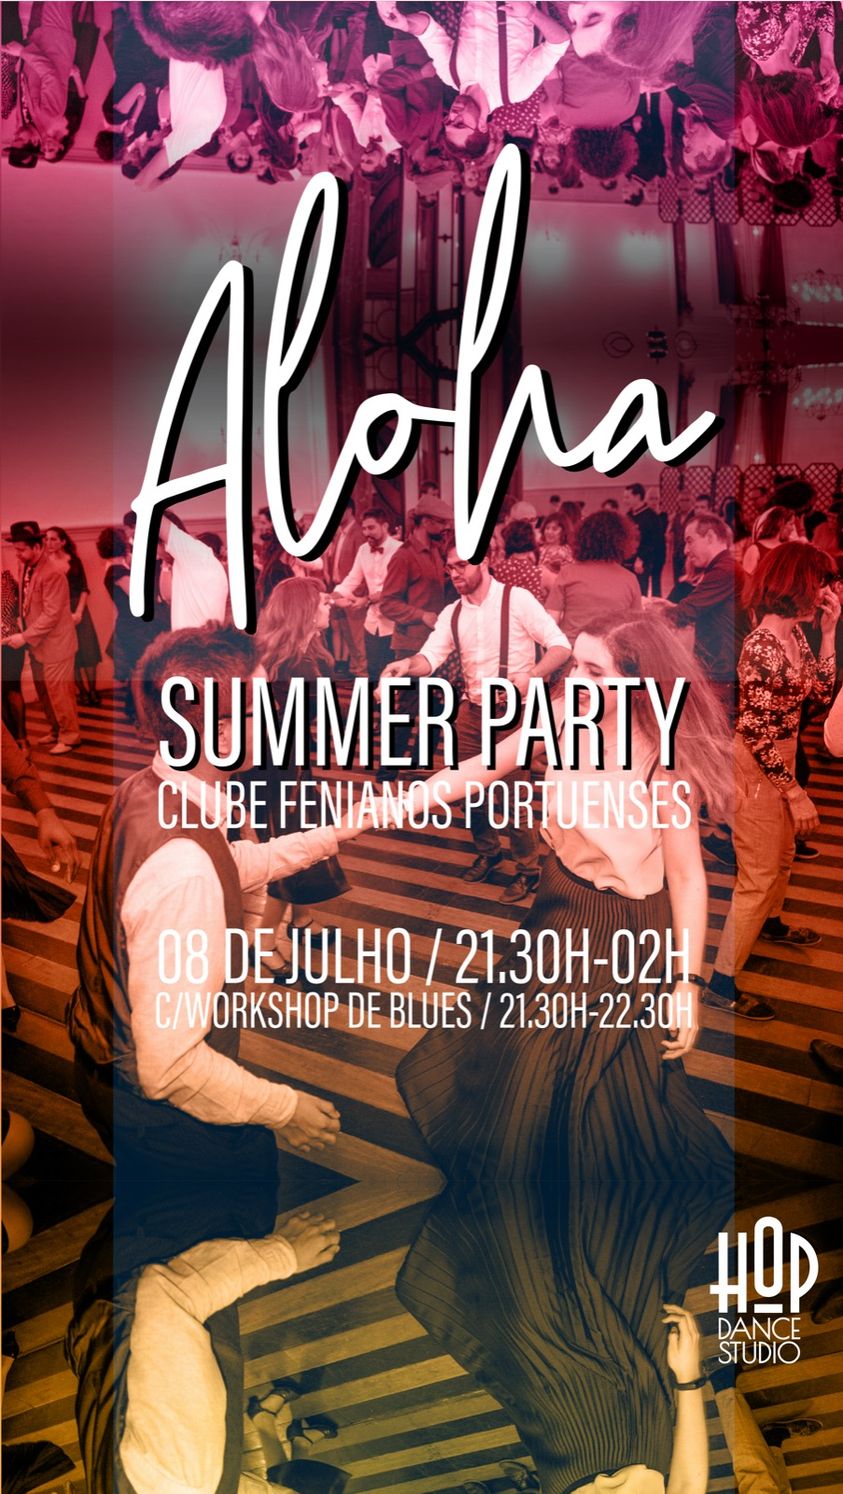 ALOHA Summer Party - Clube Fenianos Portuenses